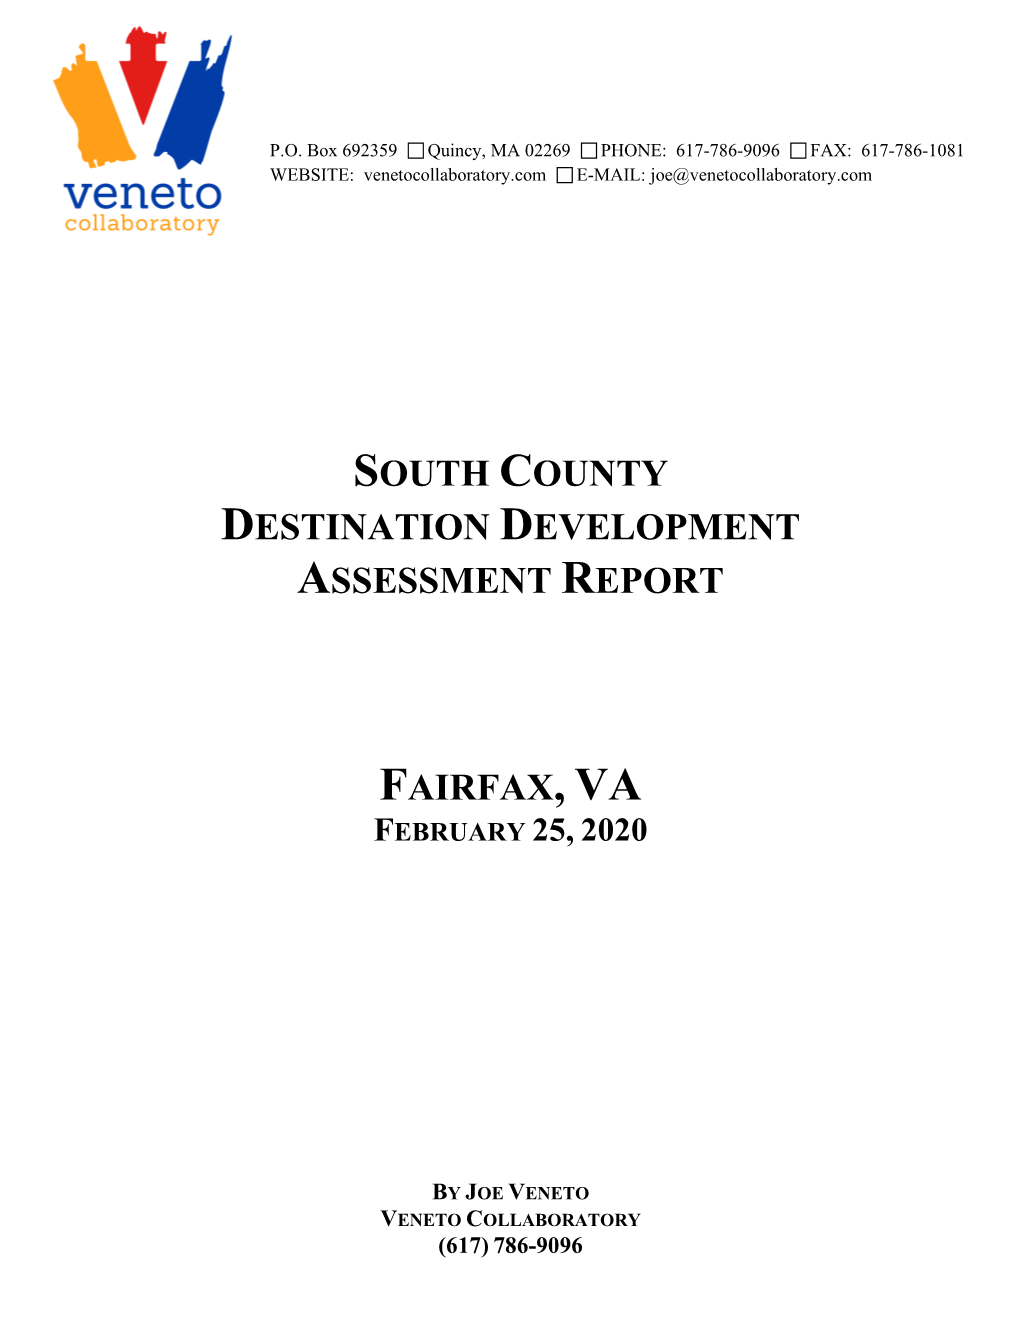 South County Destination Development Assessment Report